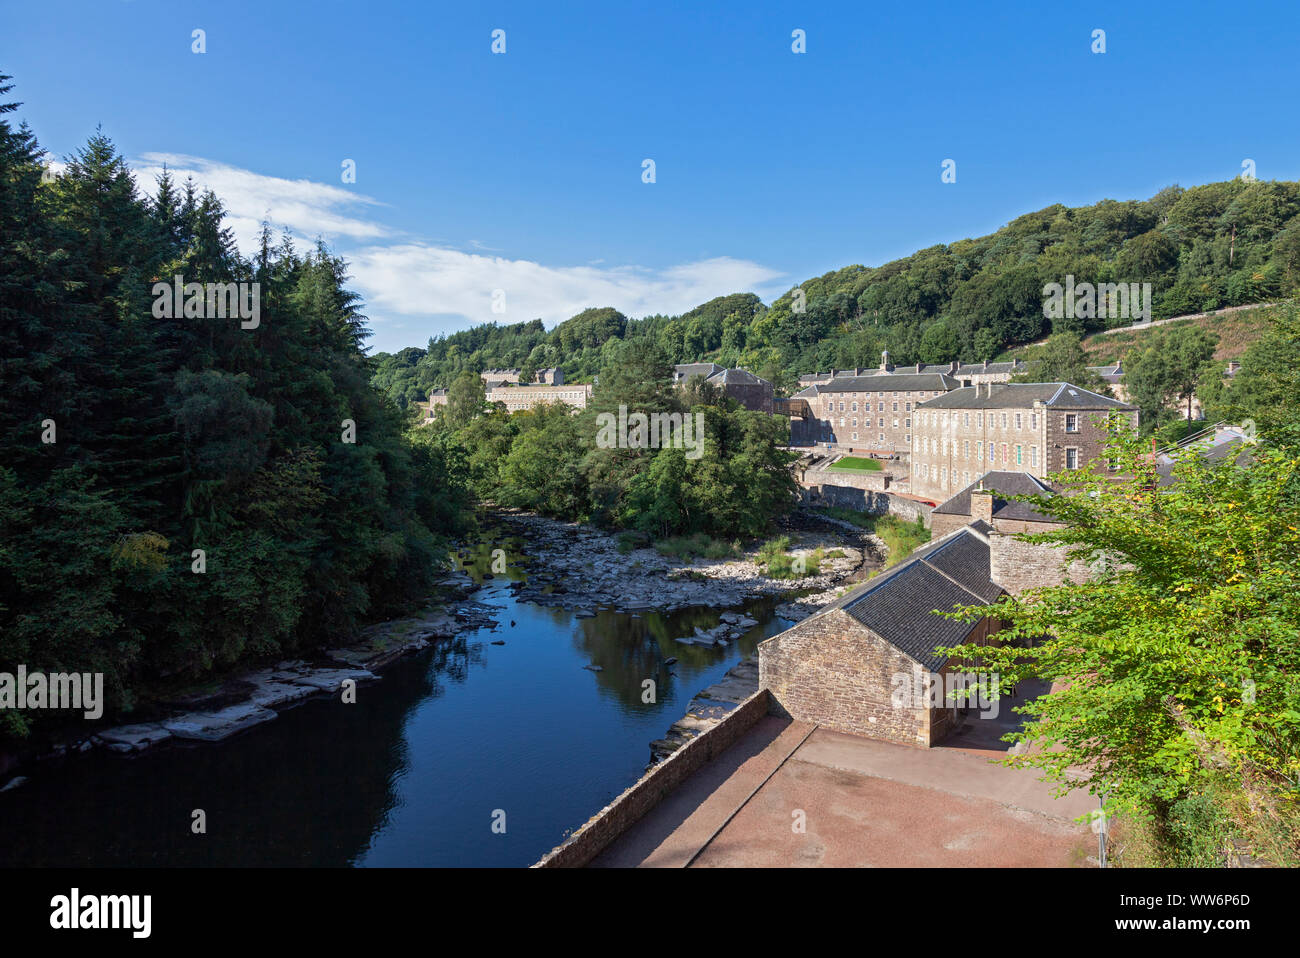 UK, Scotland, Lanarkshire, New Lanark with River Clyde Stock Photo